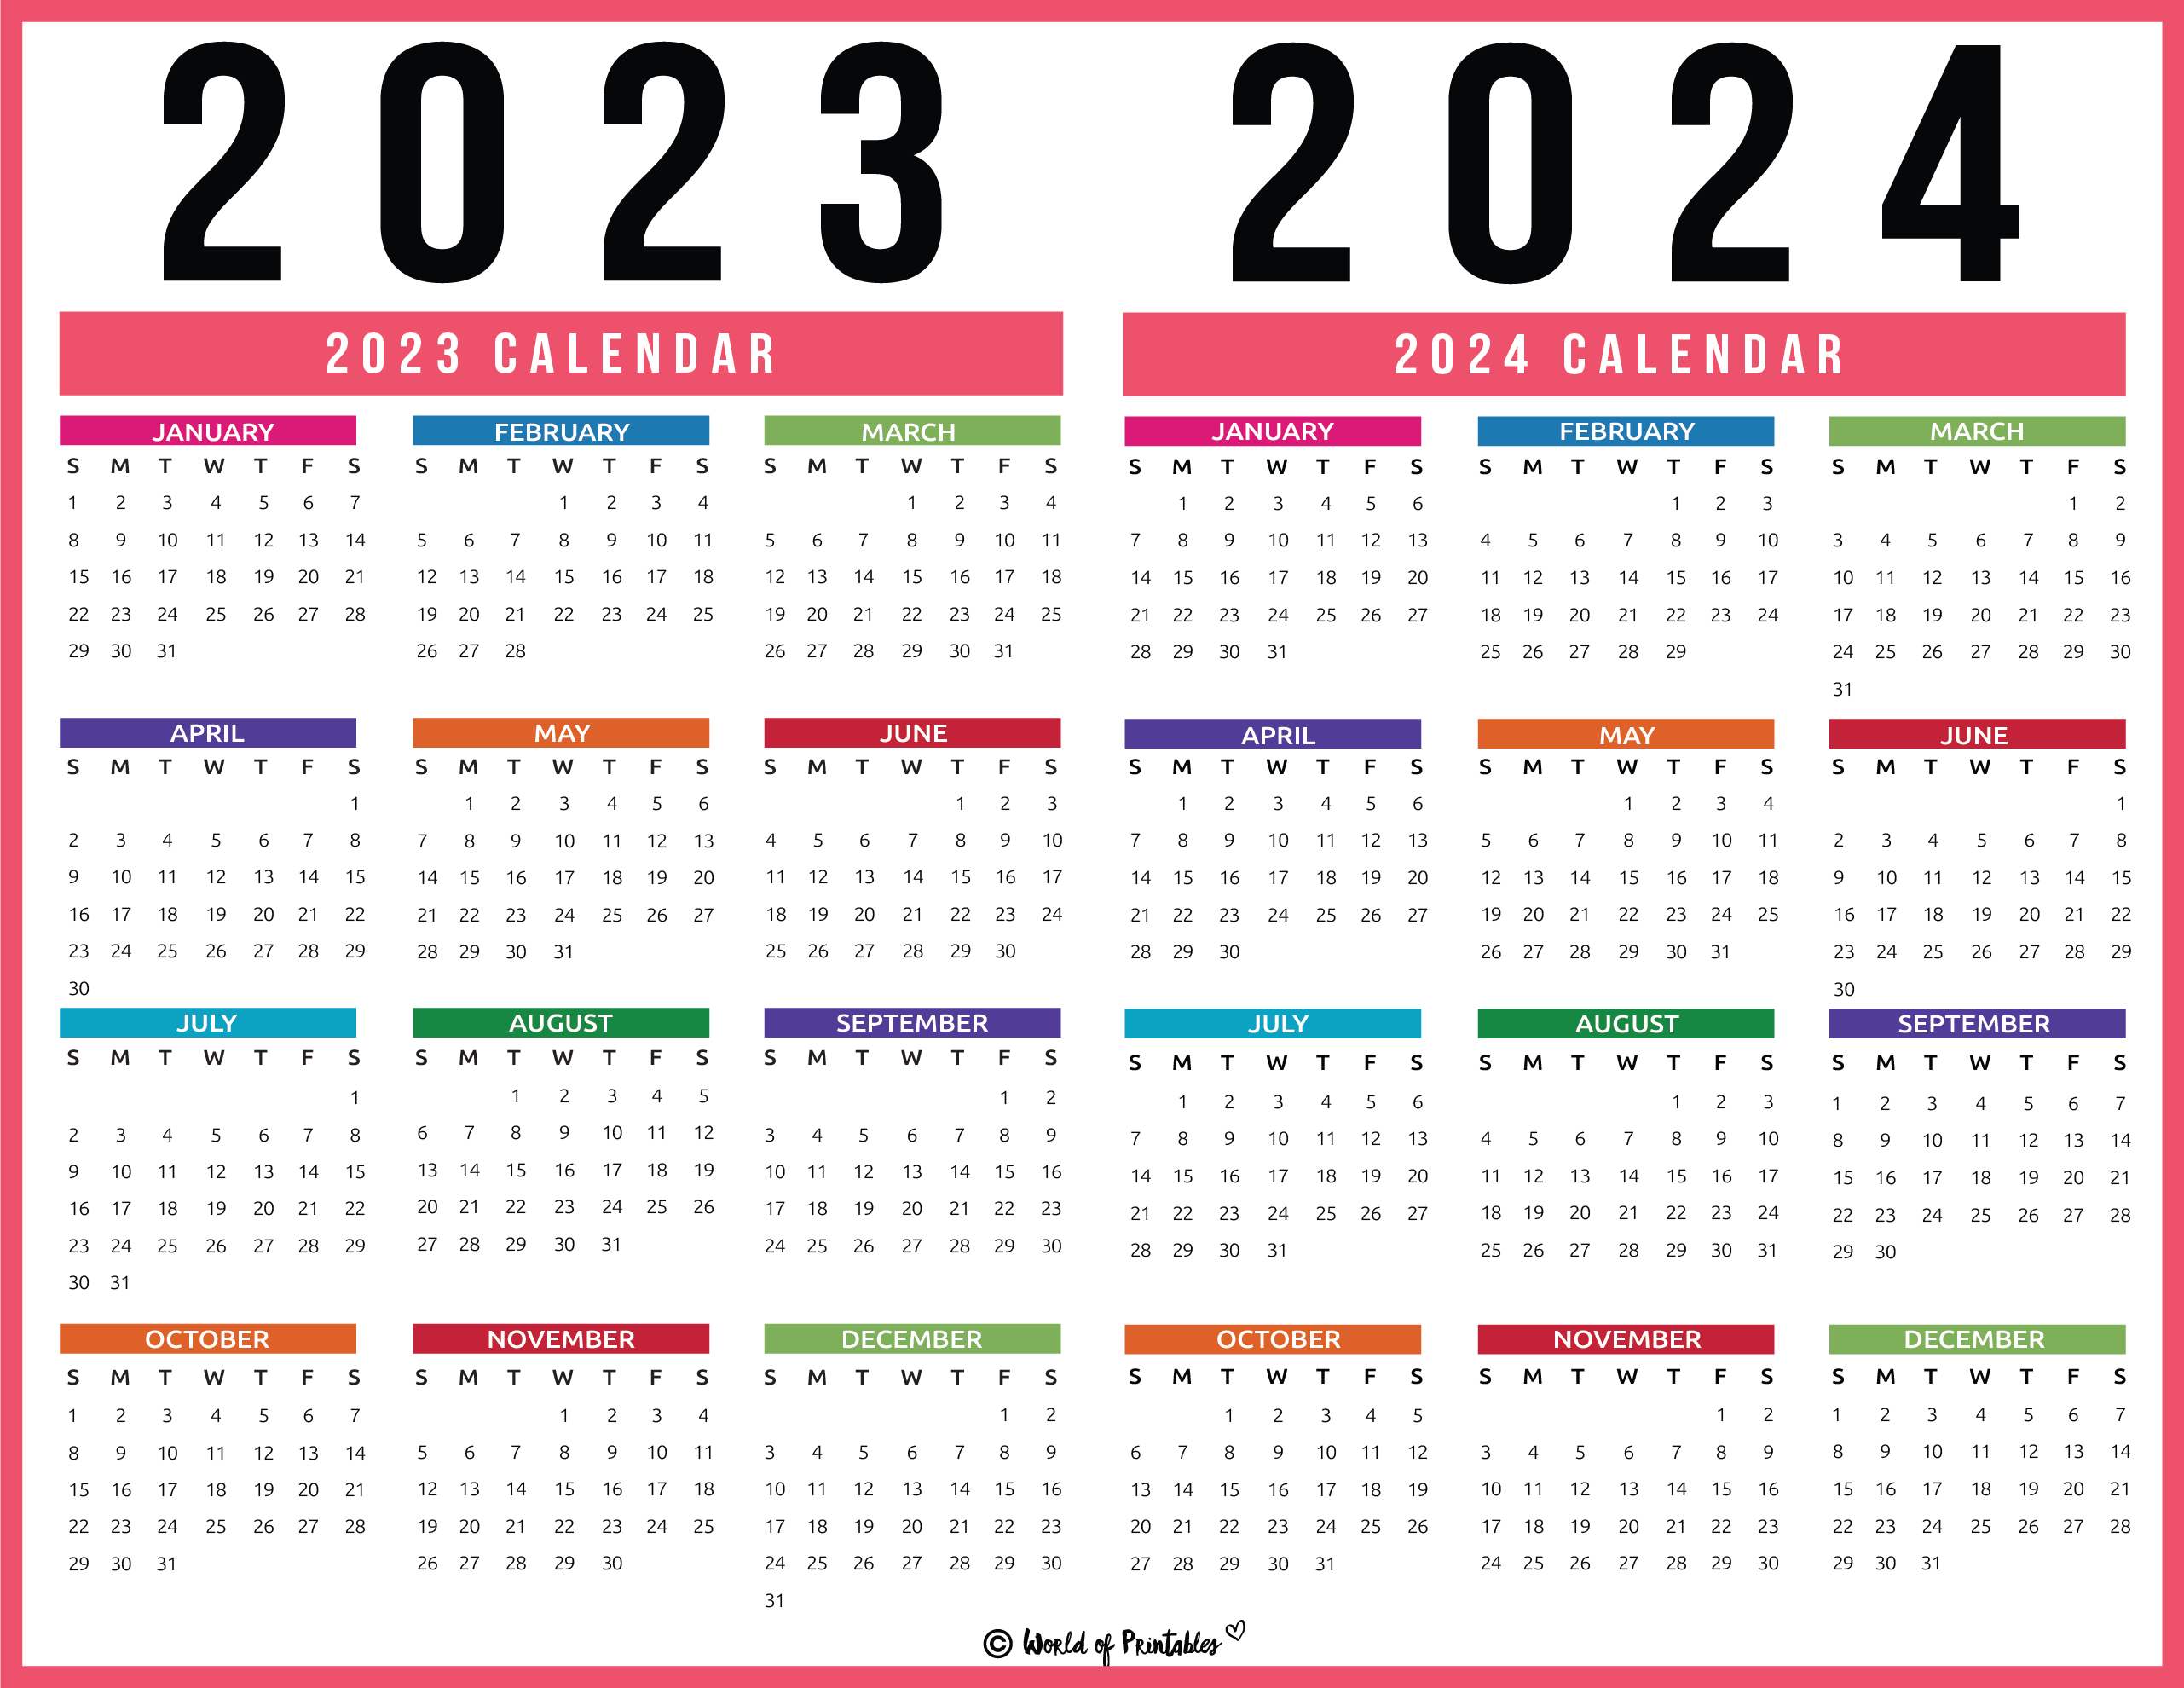 2023 2024 Calendar Free Printables - World Of Printables for Calendar Printable 2023 2024